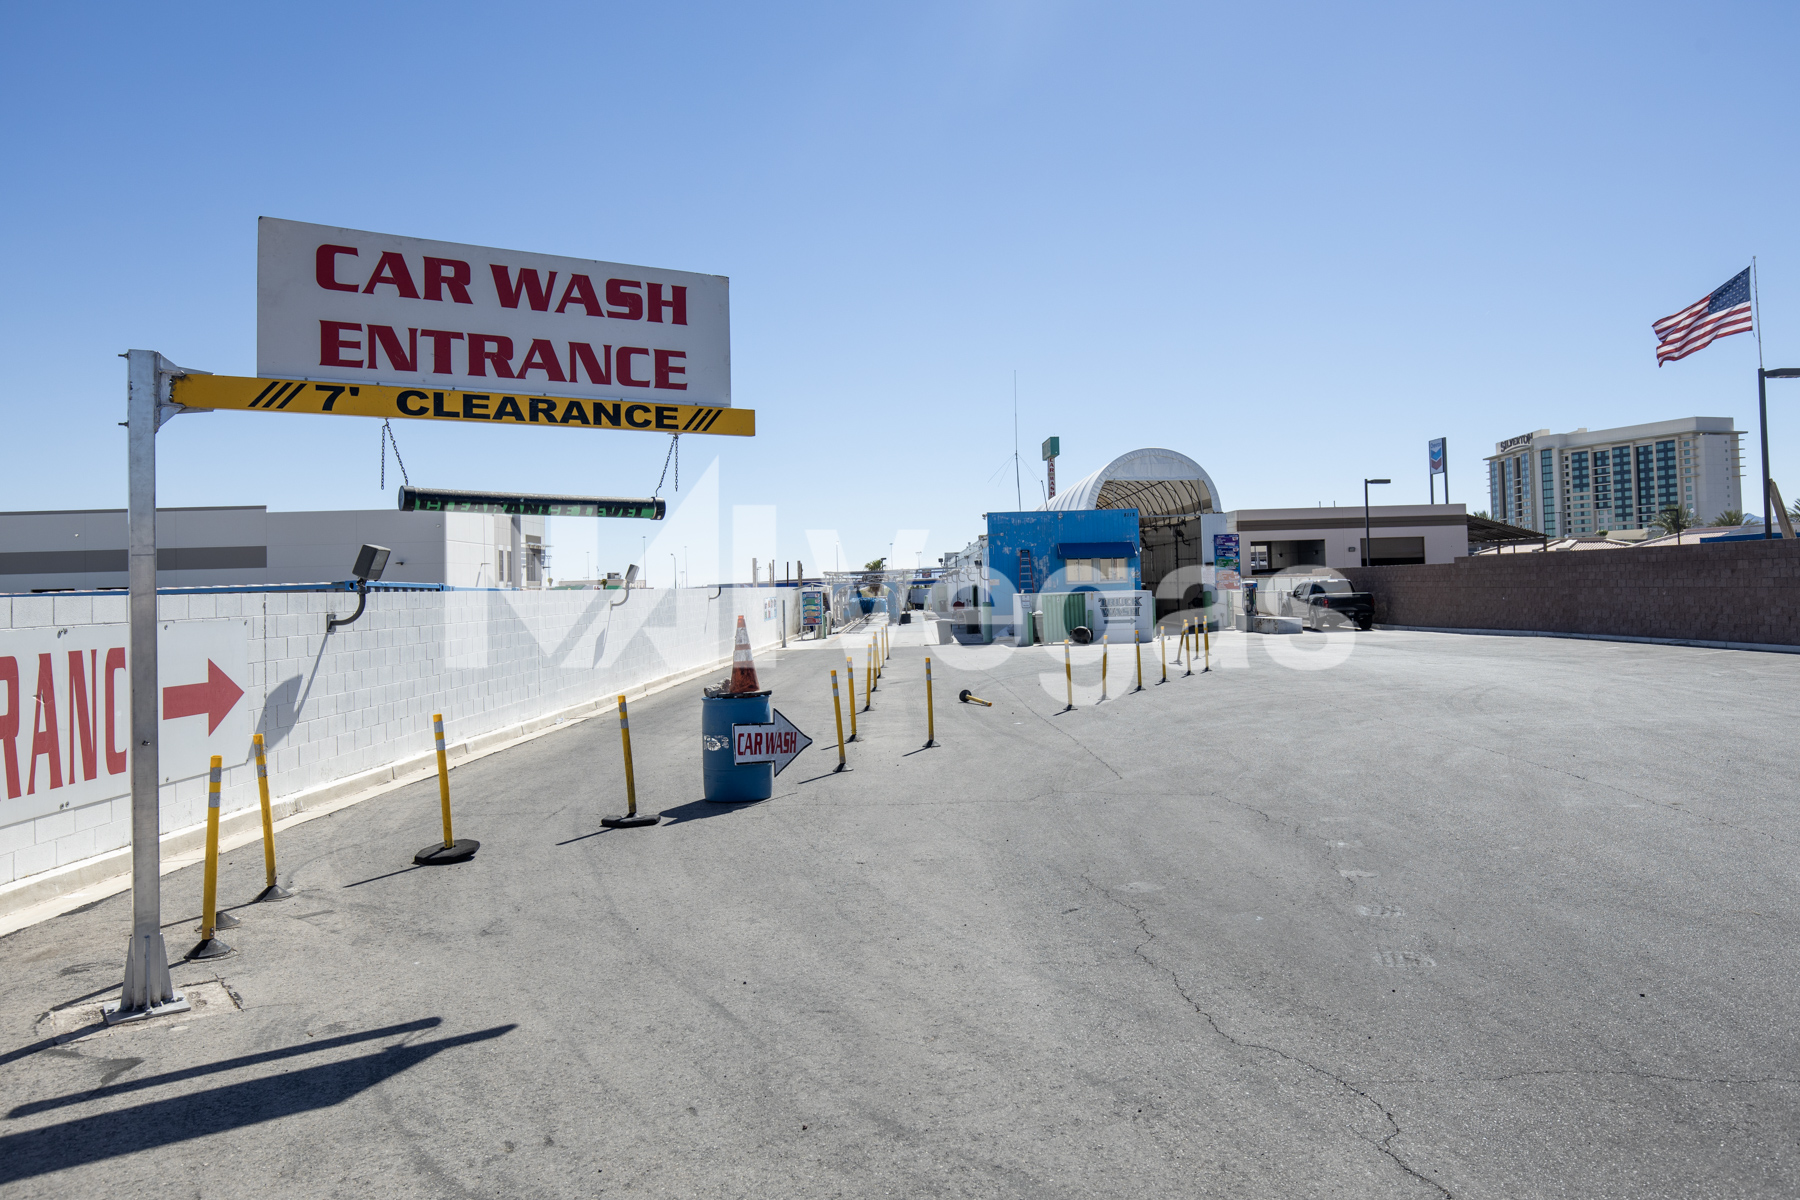 Car wash entrance sign on commercial real estate property in Las Vegas